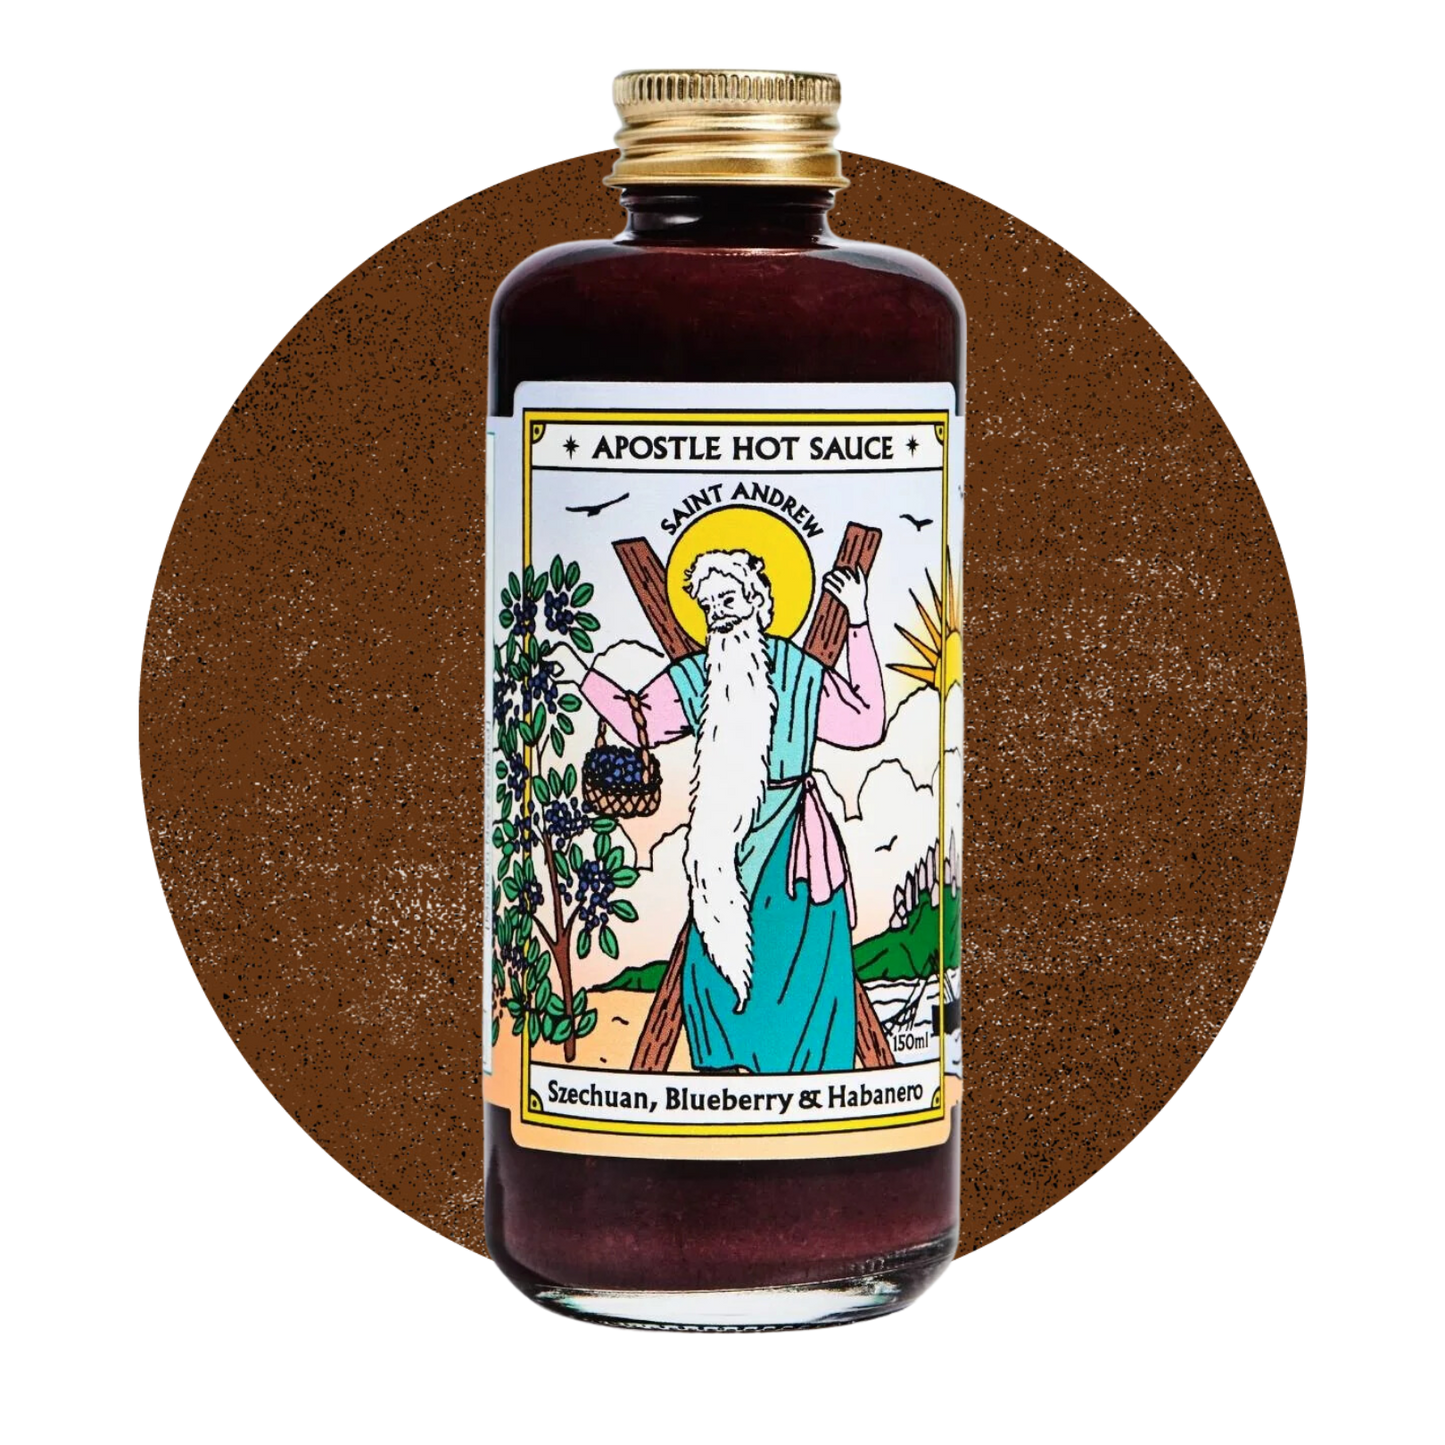 Saint Andrew: Szechuan, Blueberry & Habanero Hot Sauce